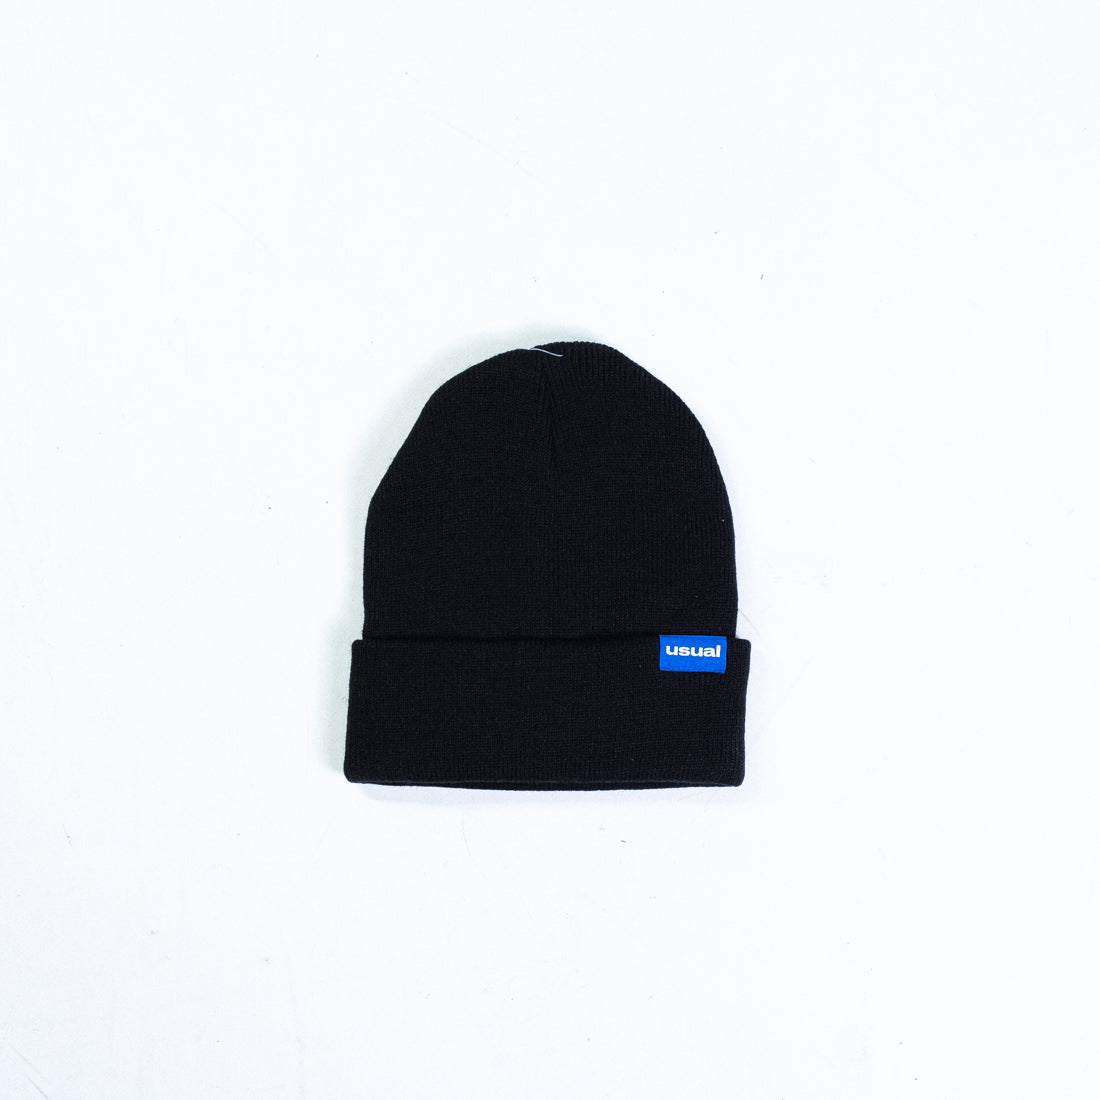 Usual winter hat - Flag Beanie-Black